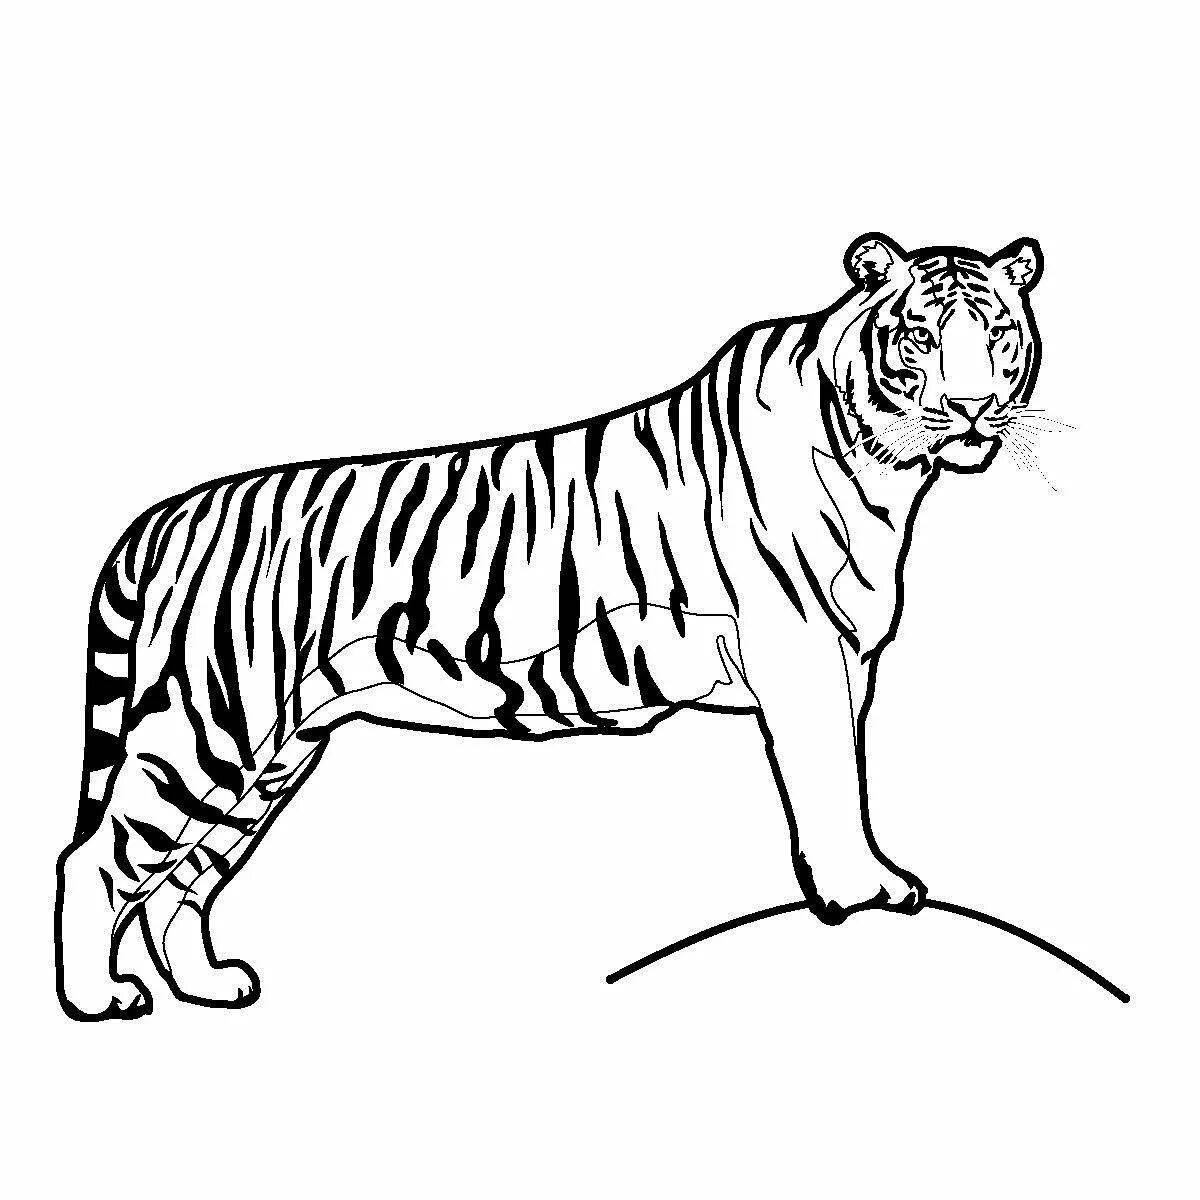 Brilliant tiger pattern